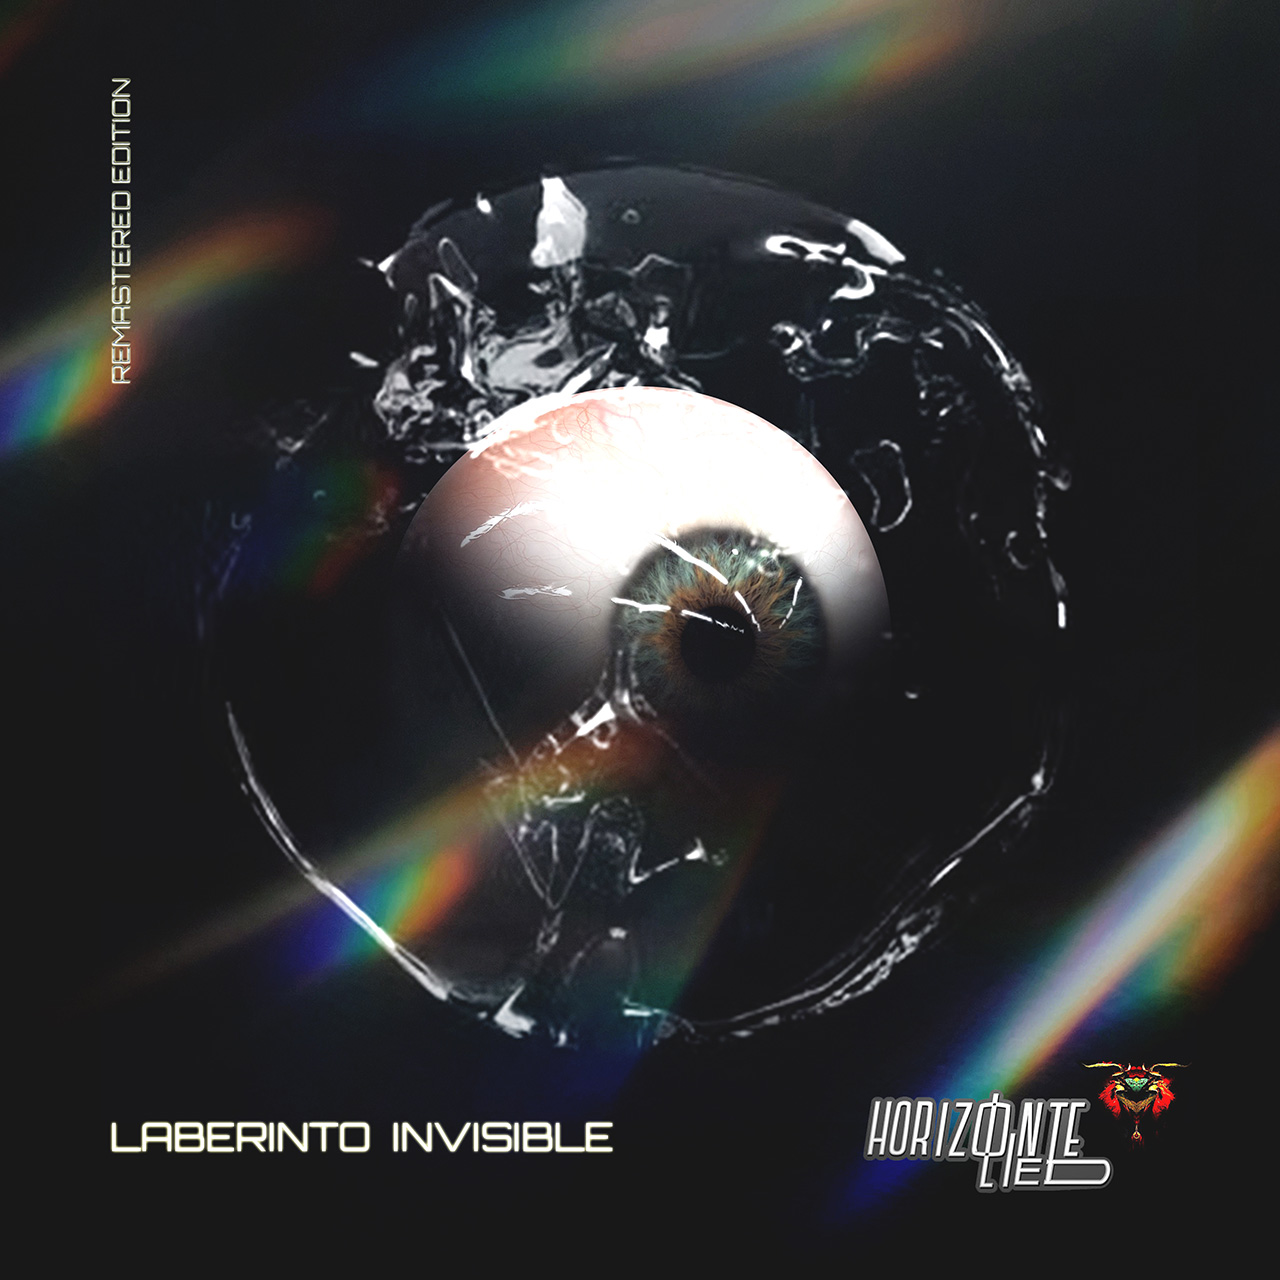 http://horizontelied.com/audio/Horizonte Lied/2022/LIMBO-P03 - Laberinto Invisible [Remastered Edition] (Single)/LIMBO-P03 - Horizonte Lied - Laberinto Invisible [Remastered Edition] (Single).jpg